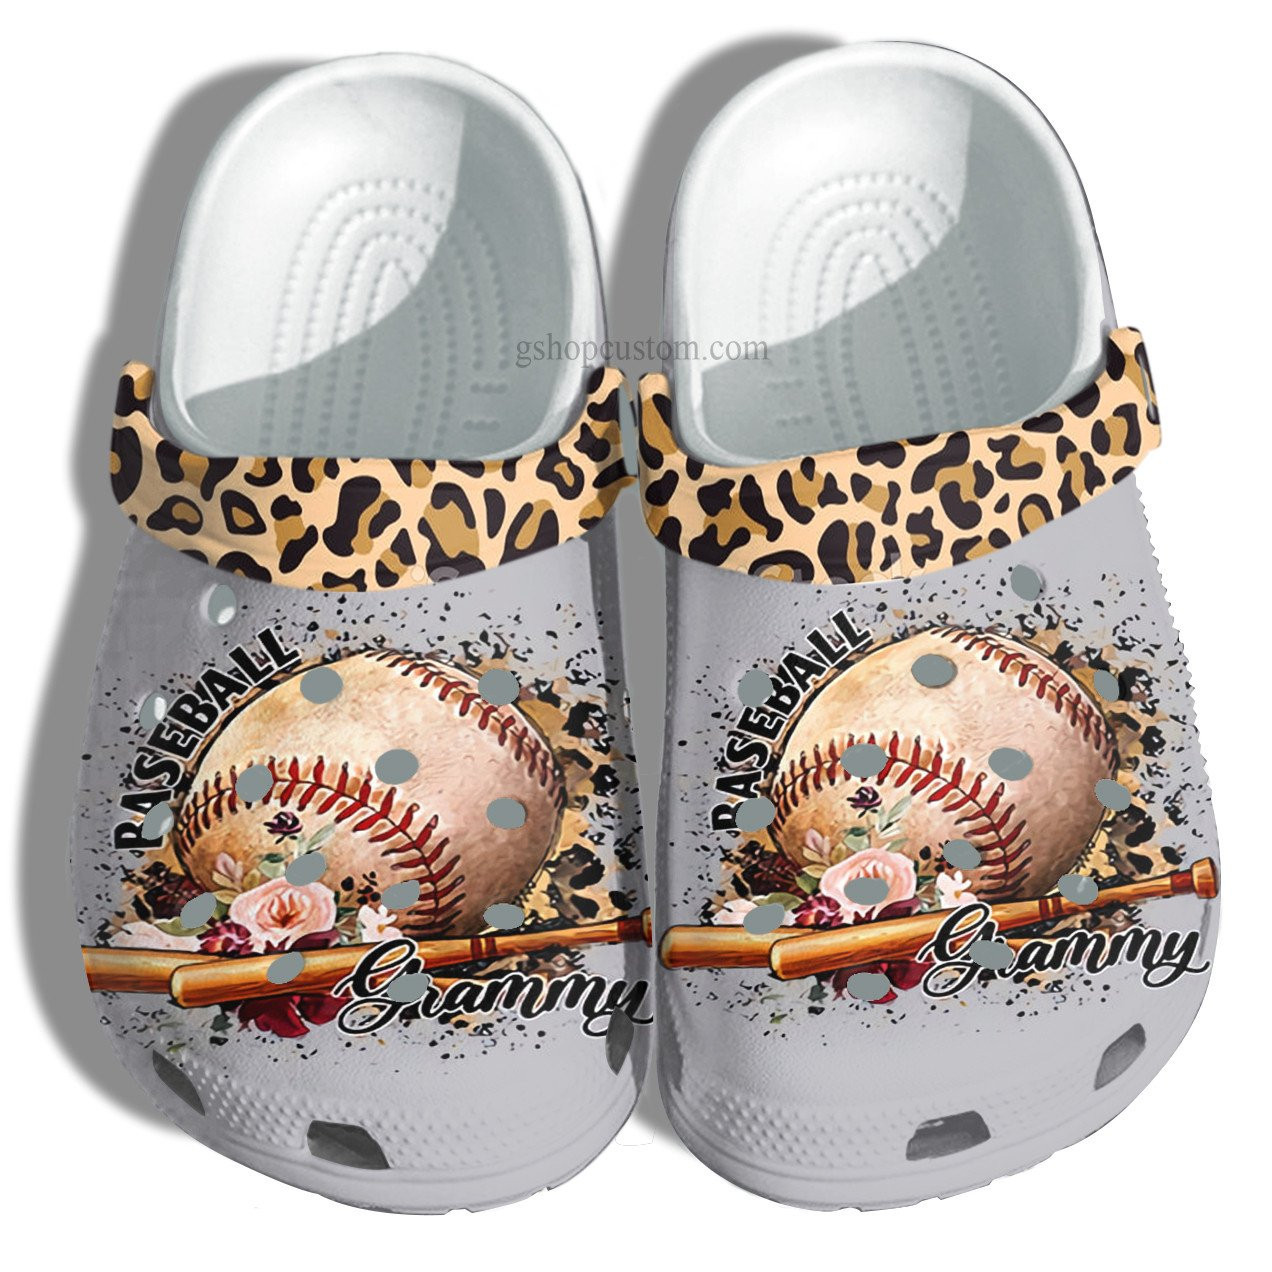 Baseball Grammy Leopard Skin Flower Crocs Shoes For Mother Day - Baseball Grandma Crocs Shoes Croc Clogs Customize Name